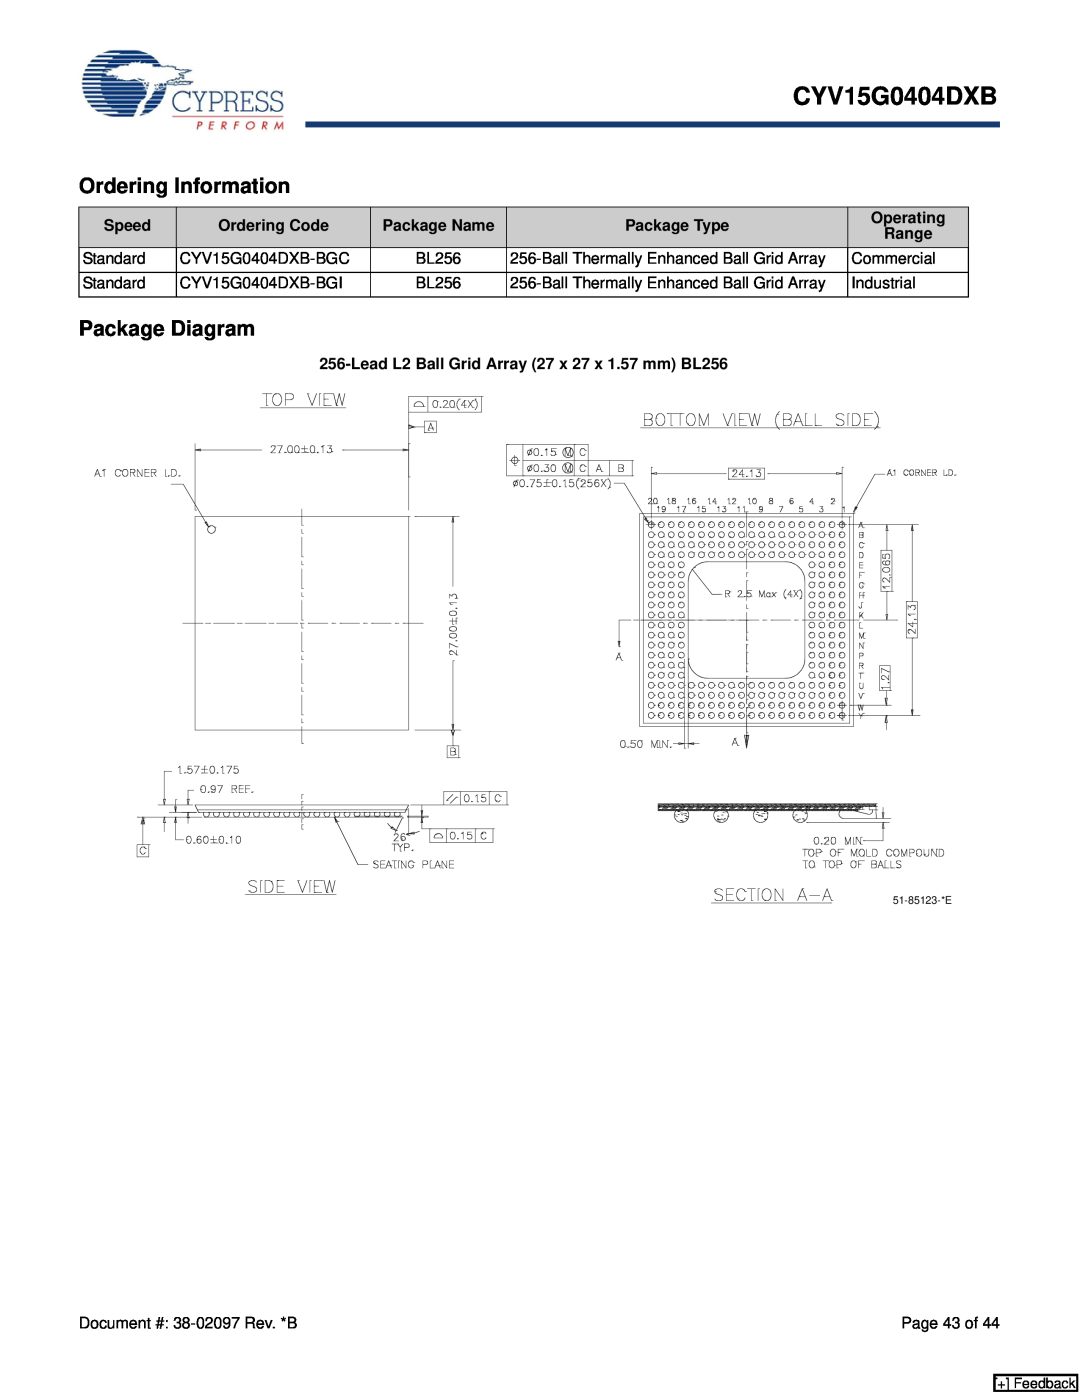 Cypress CYV15G0404DXB manual Ordering Information, Package Diagram, + Feedback, 51-85123-*E 